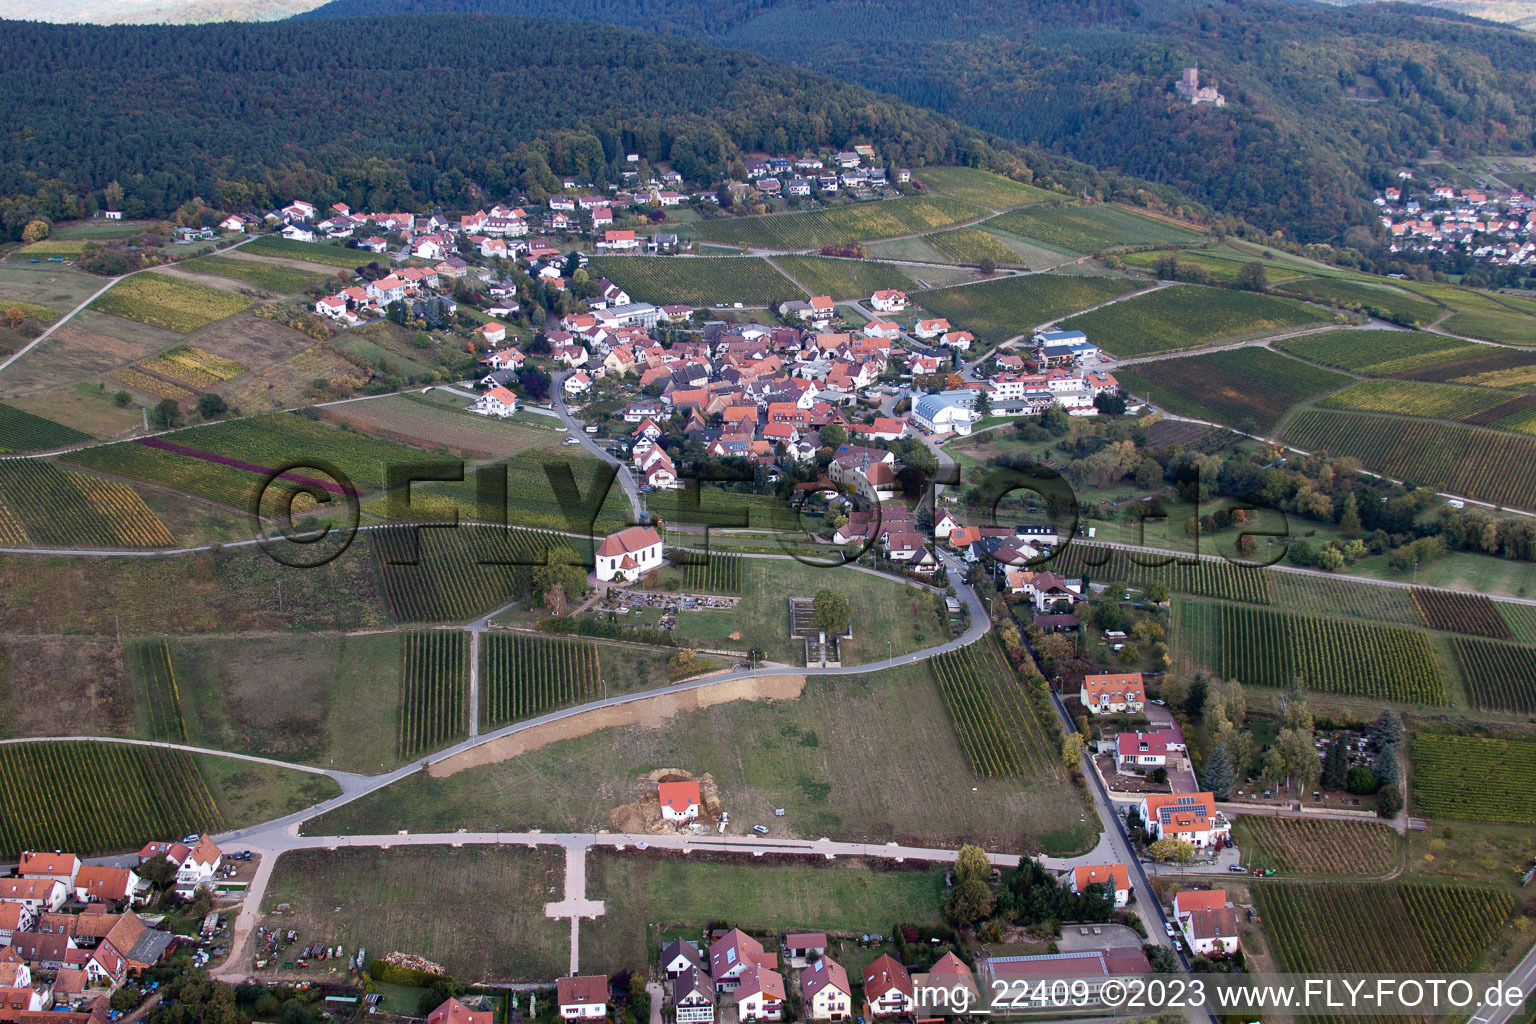 Vue aérienne de Quartier Gleiszellen in Gleiszellen-Gleishorbach dans le département Rhénanie-Palatinat, Allemagne